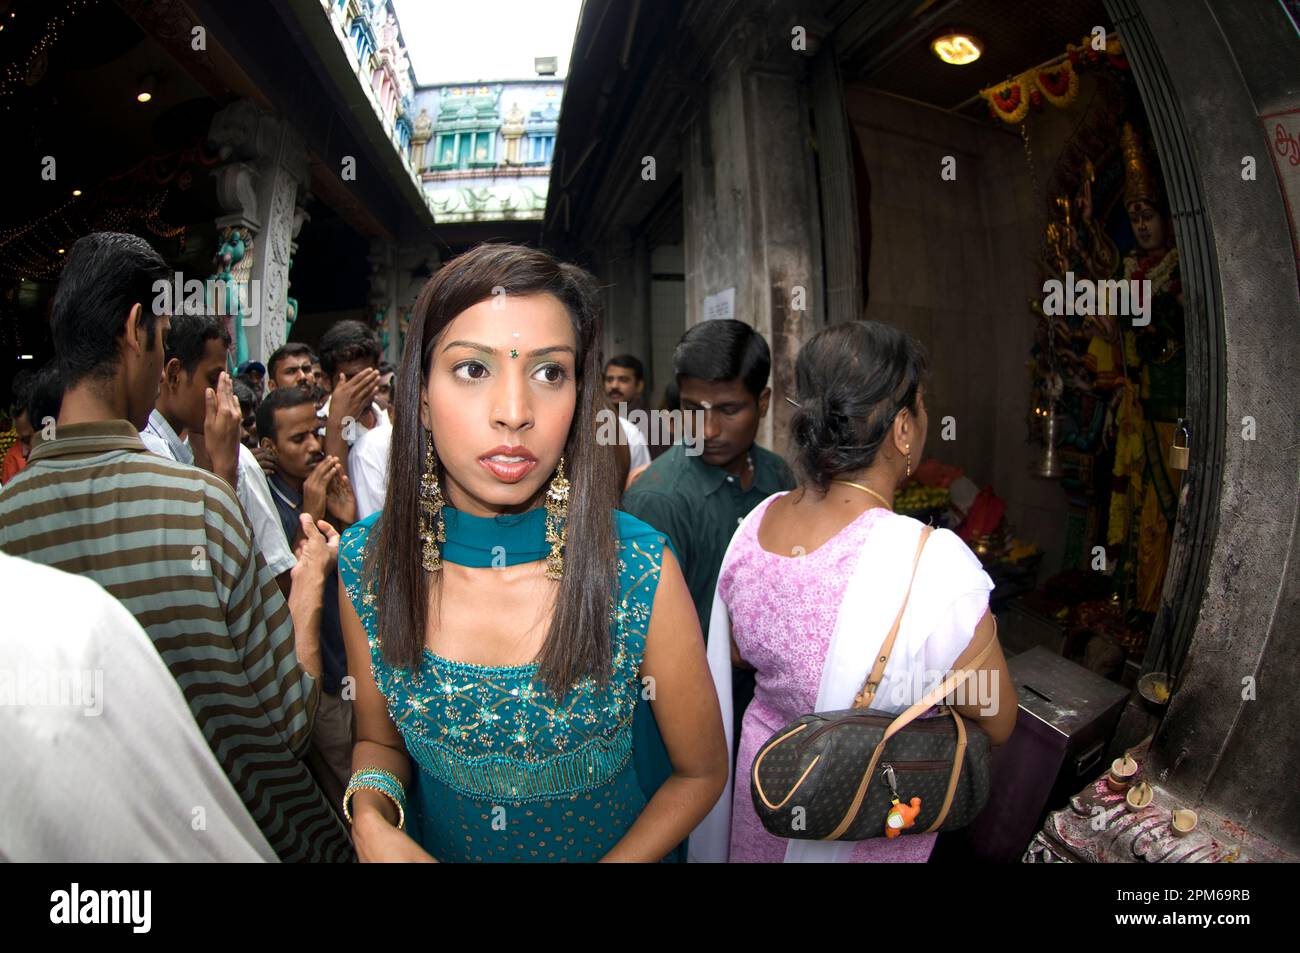 Woman in sari among devotees at Deepavali ceremony, Sri Veeramakaliamman Temple, Little India, Singapore Stock Photo